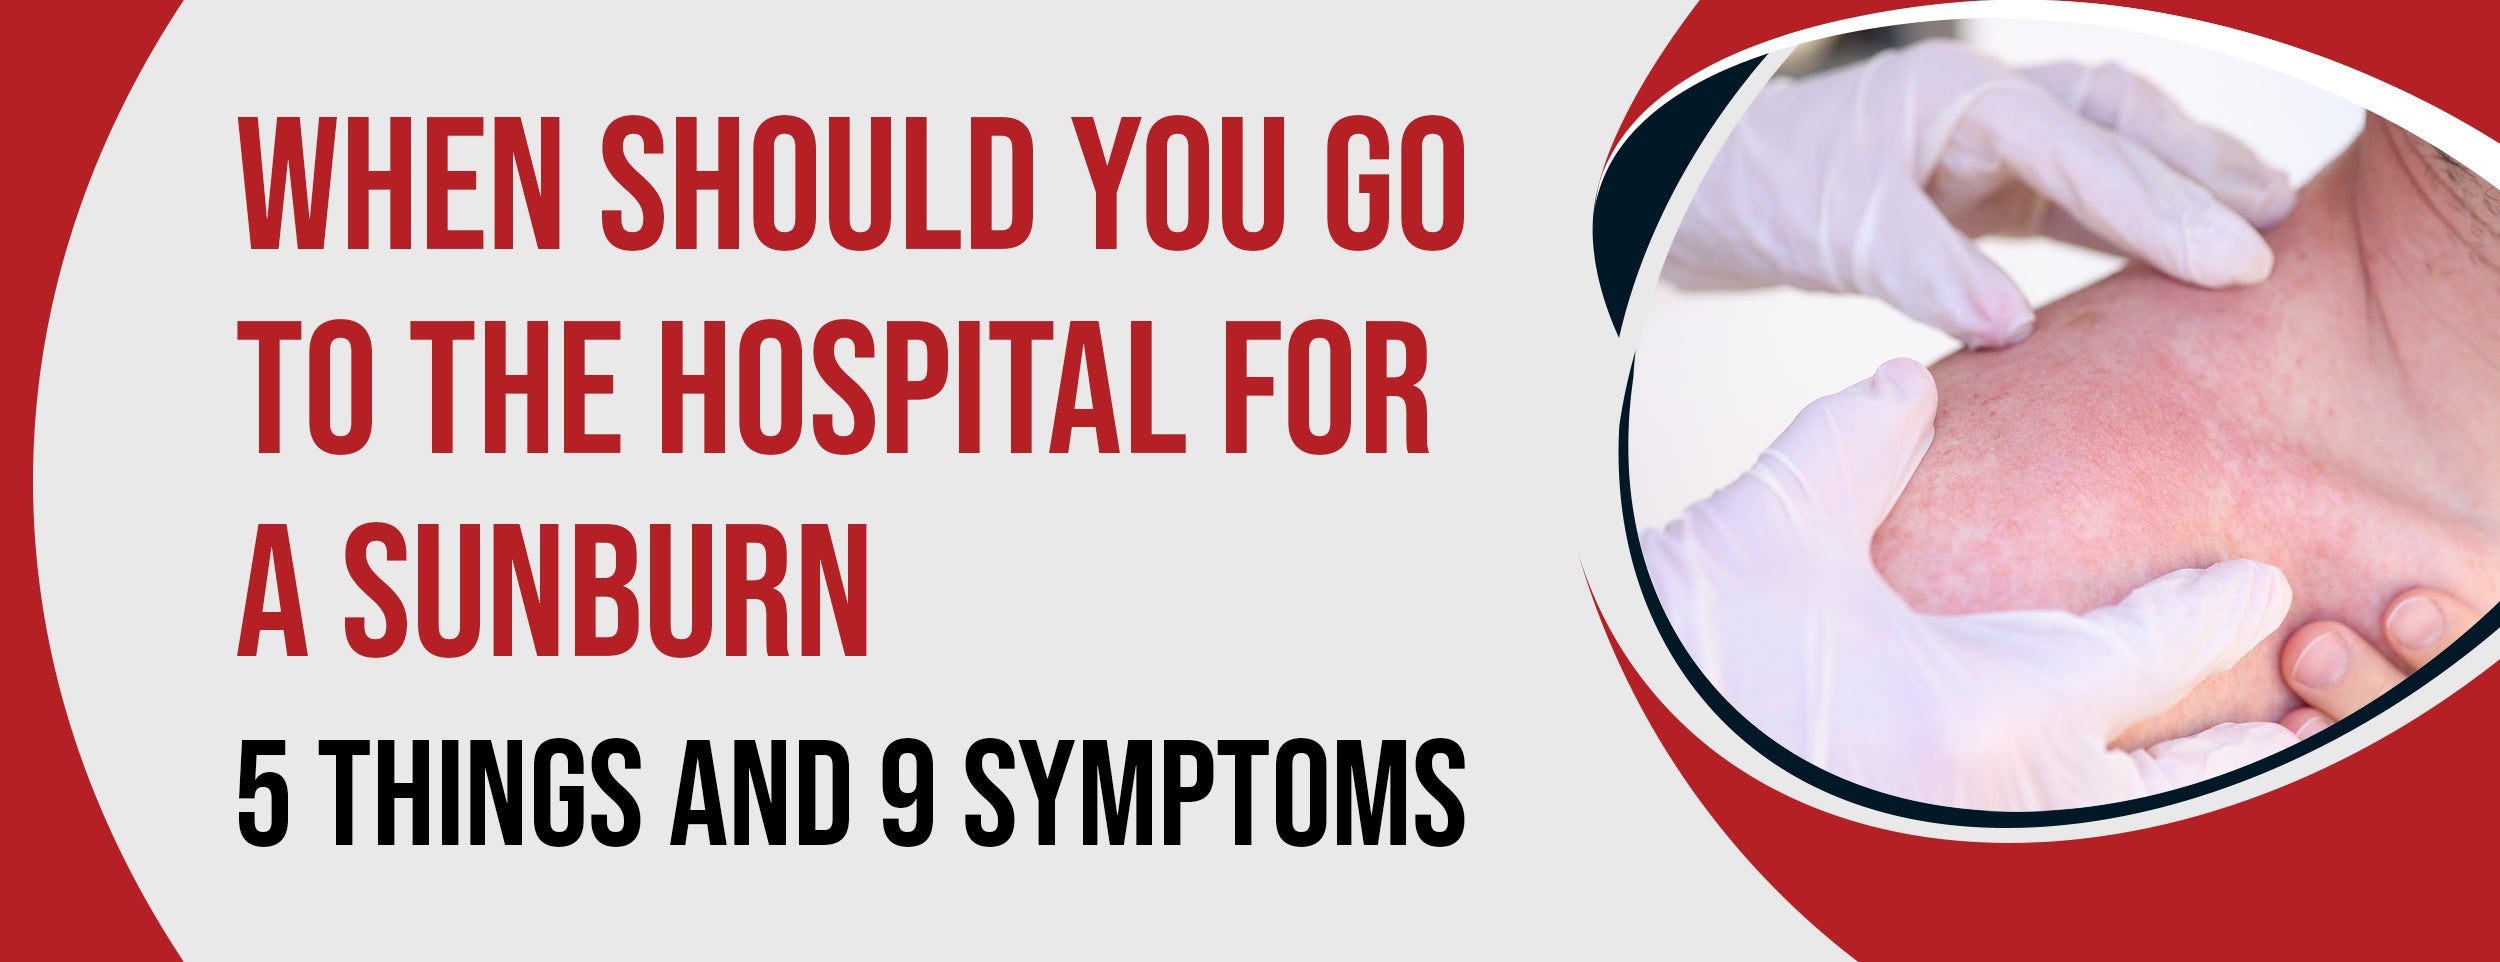 9 Sunburn Symptoms [5 Factors] When To Go To The Hospital